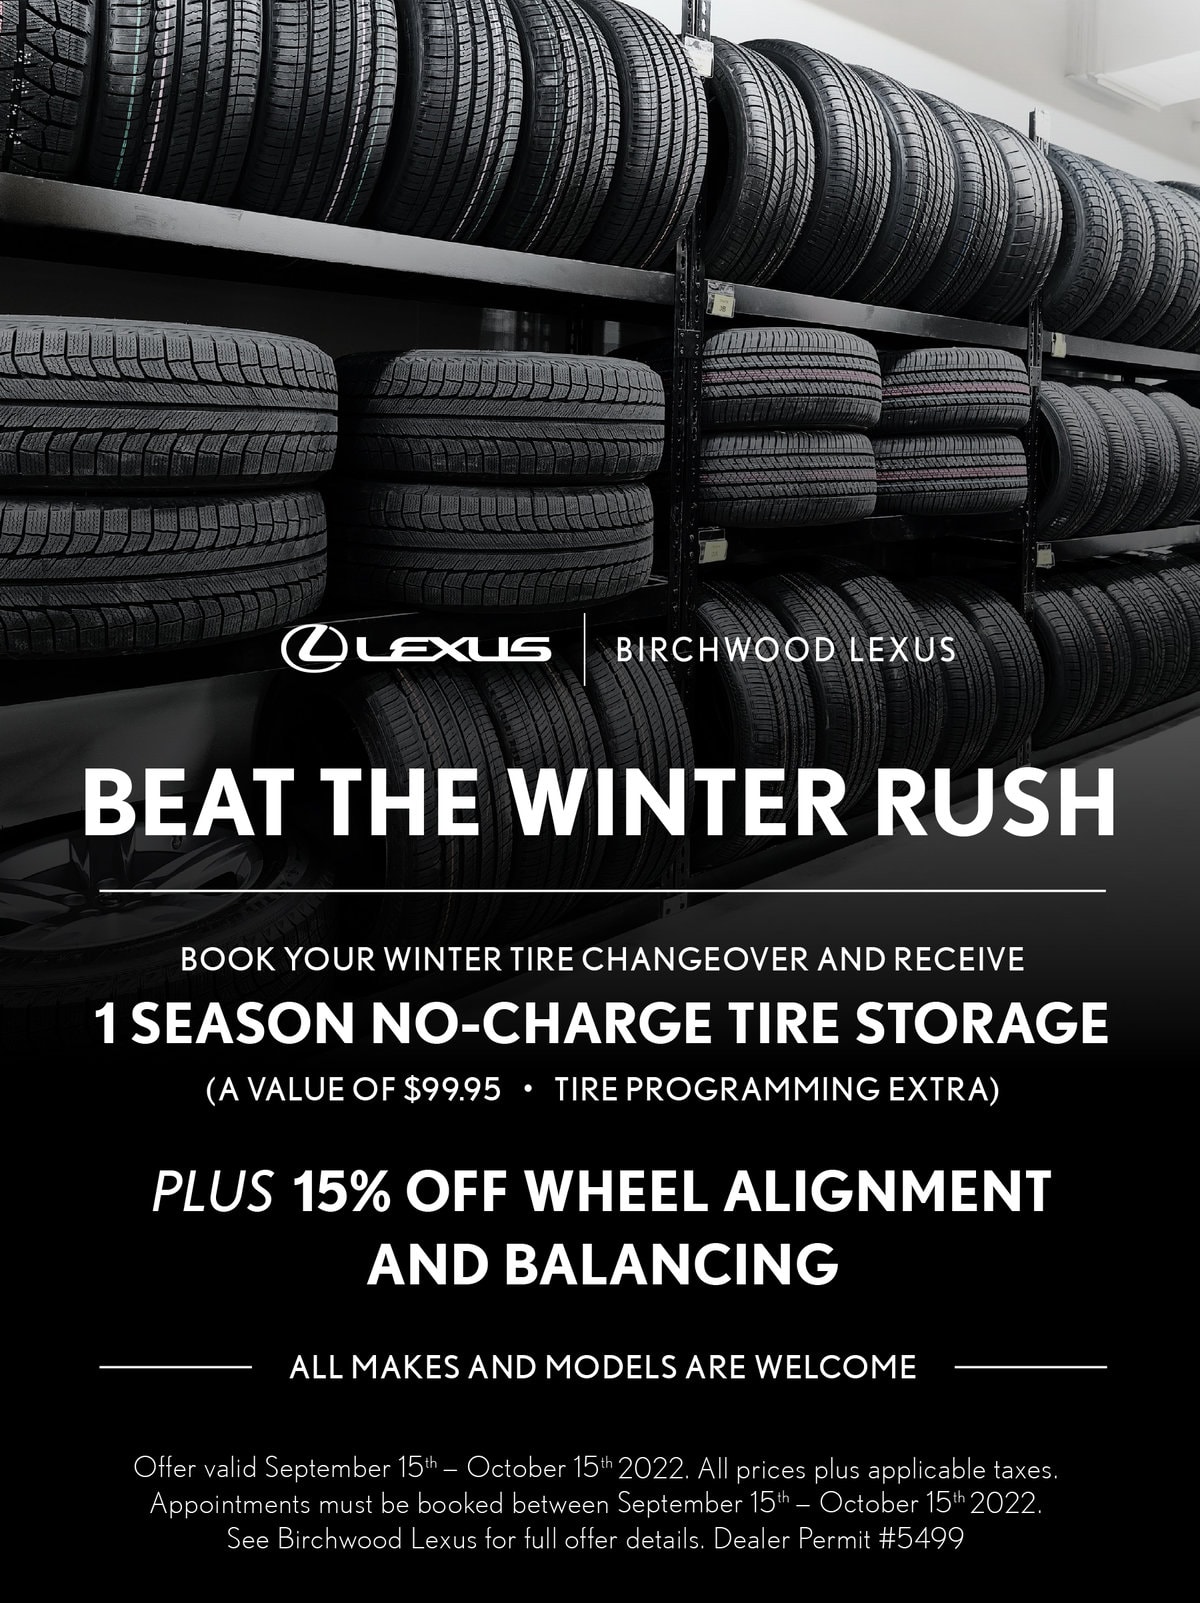 Birchwood Lexus Beat the Winter Tire Rush 1 Season No-Charge Tire Storage